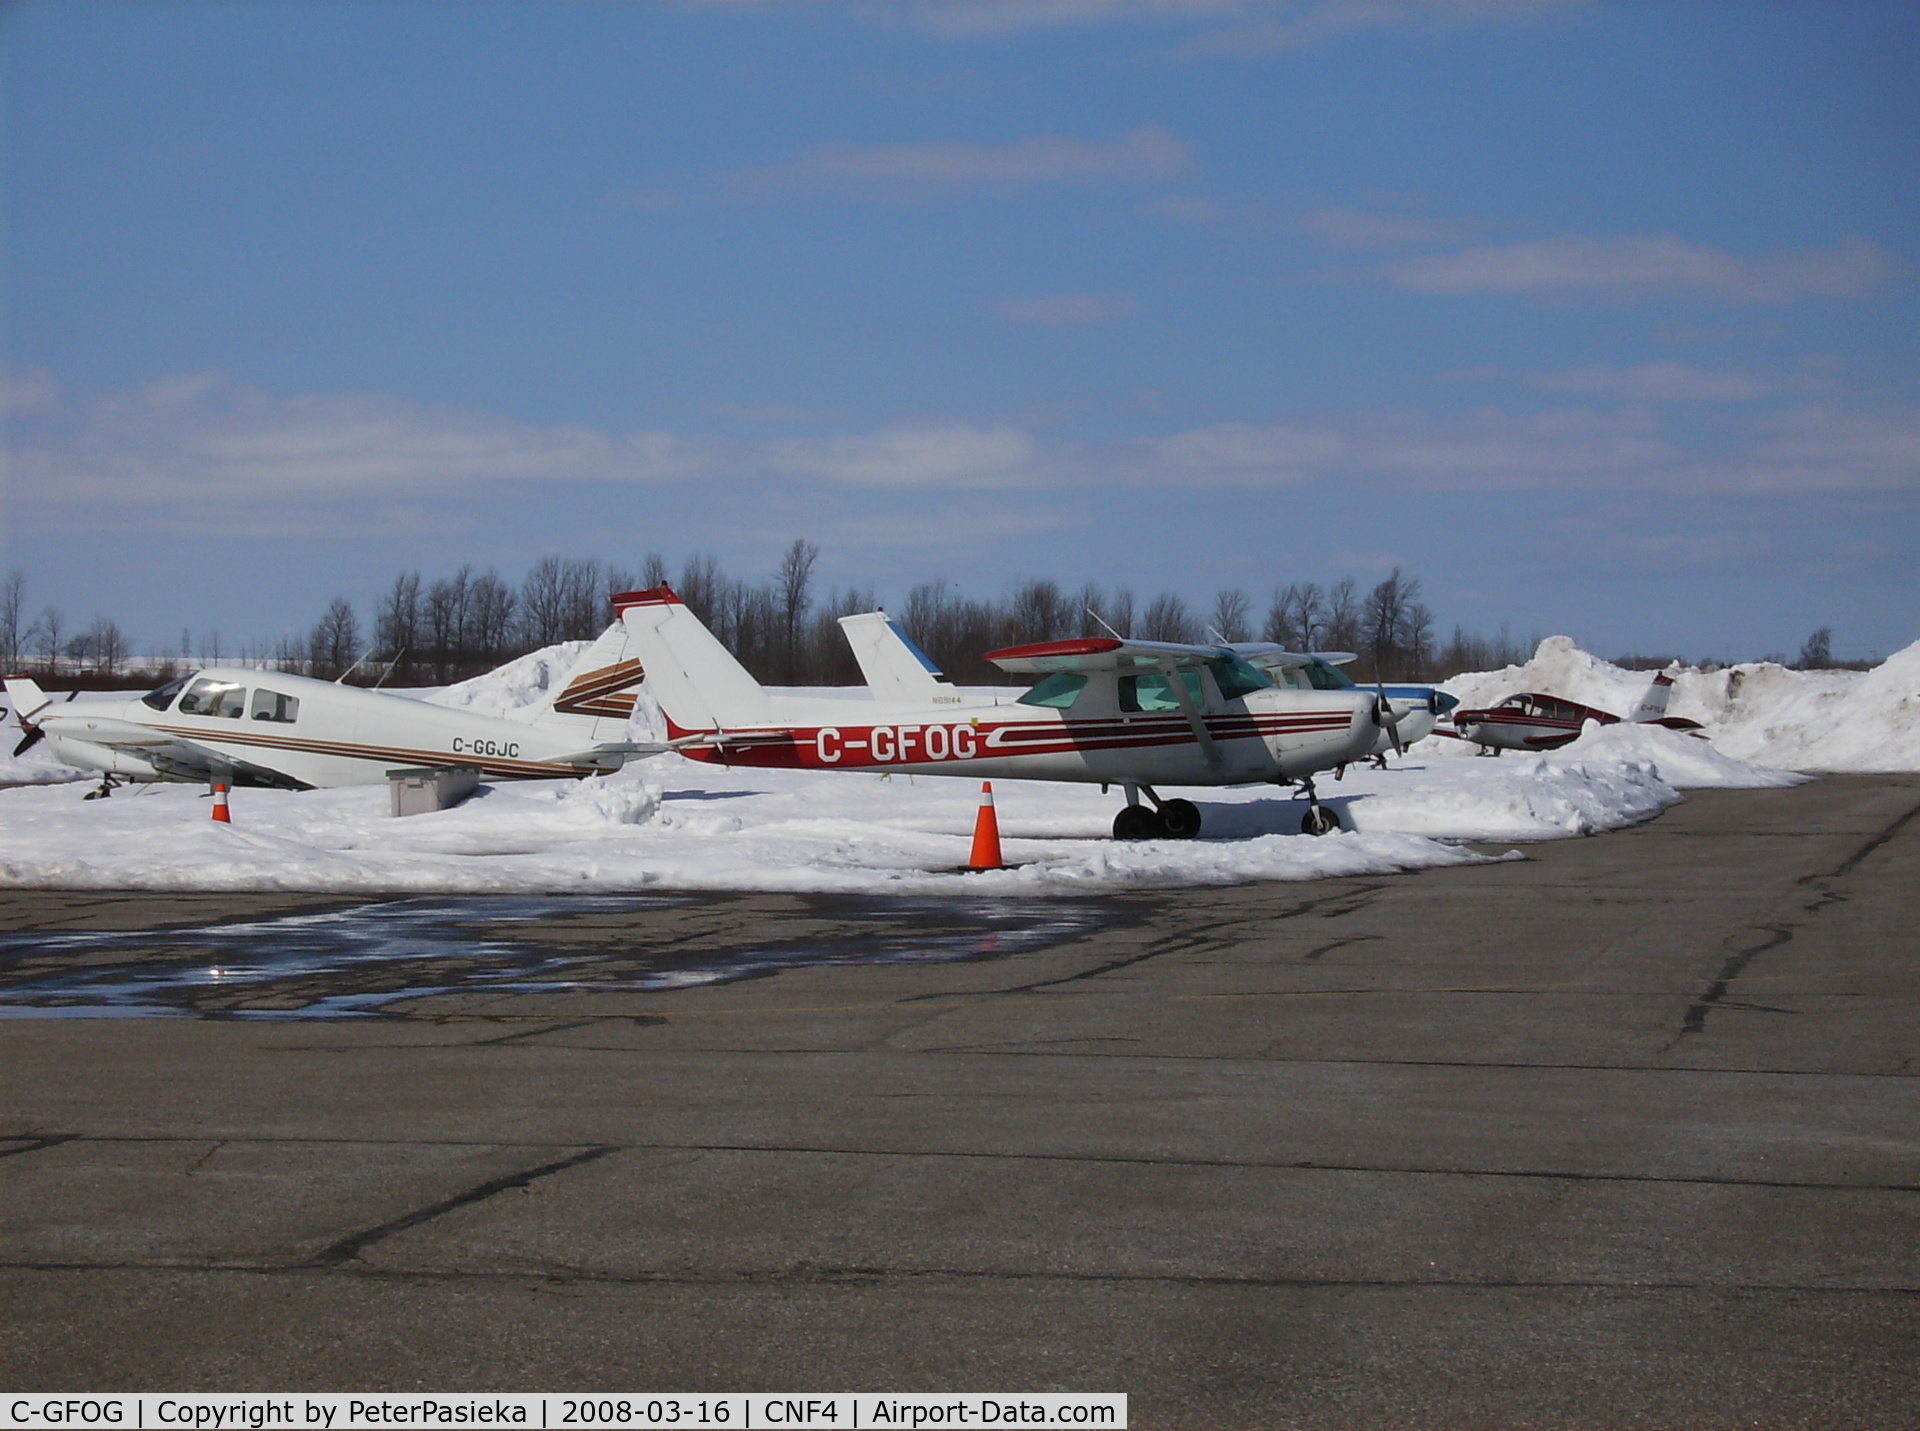 C-GFOG, 1980 Cessna 152 C/N 15284265, @ Lindsay Airport, March 2008